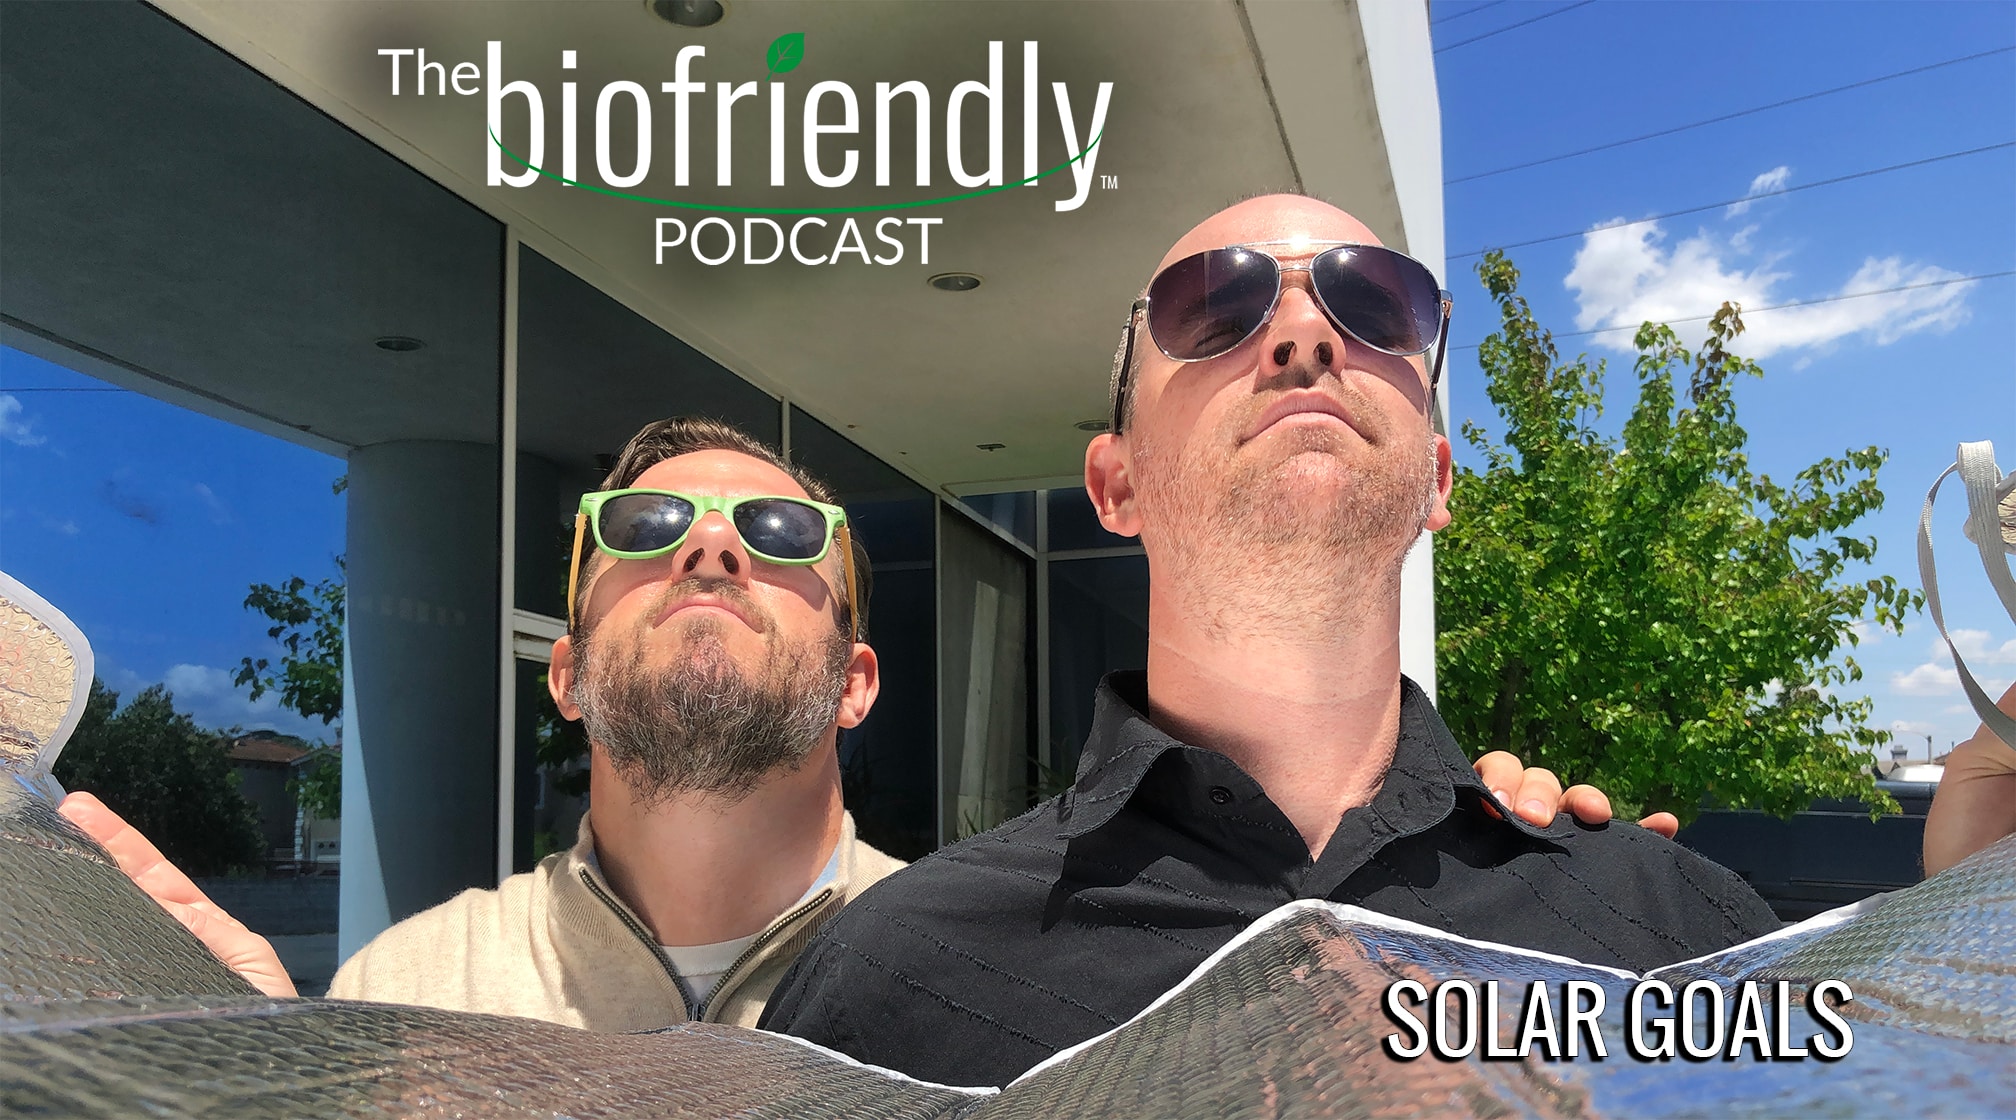 The Biofriendly Podcast - Episode 14 - Solar Goals